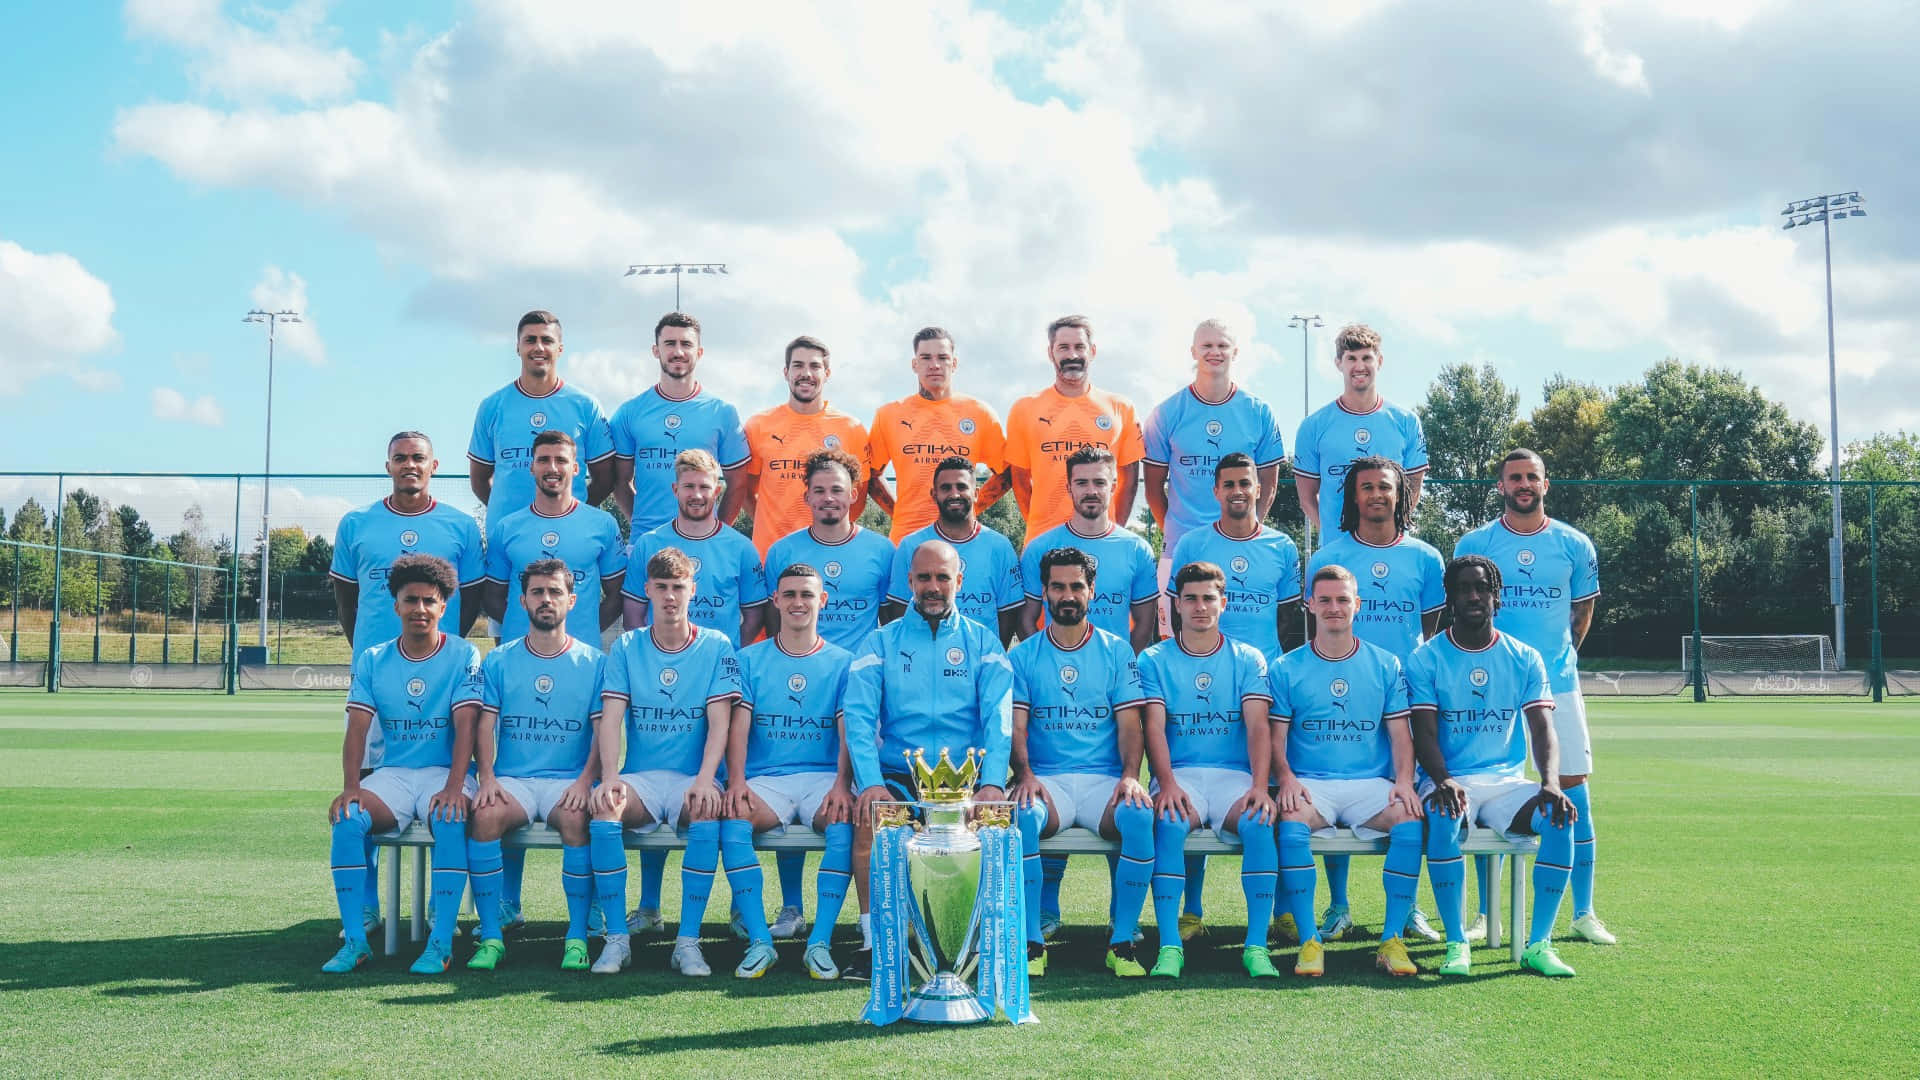 Manchester City Team Photo